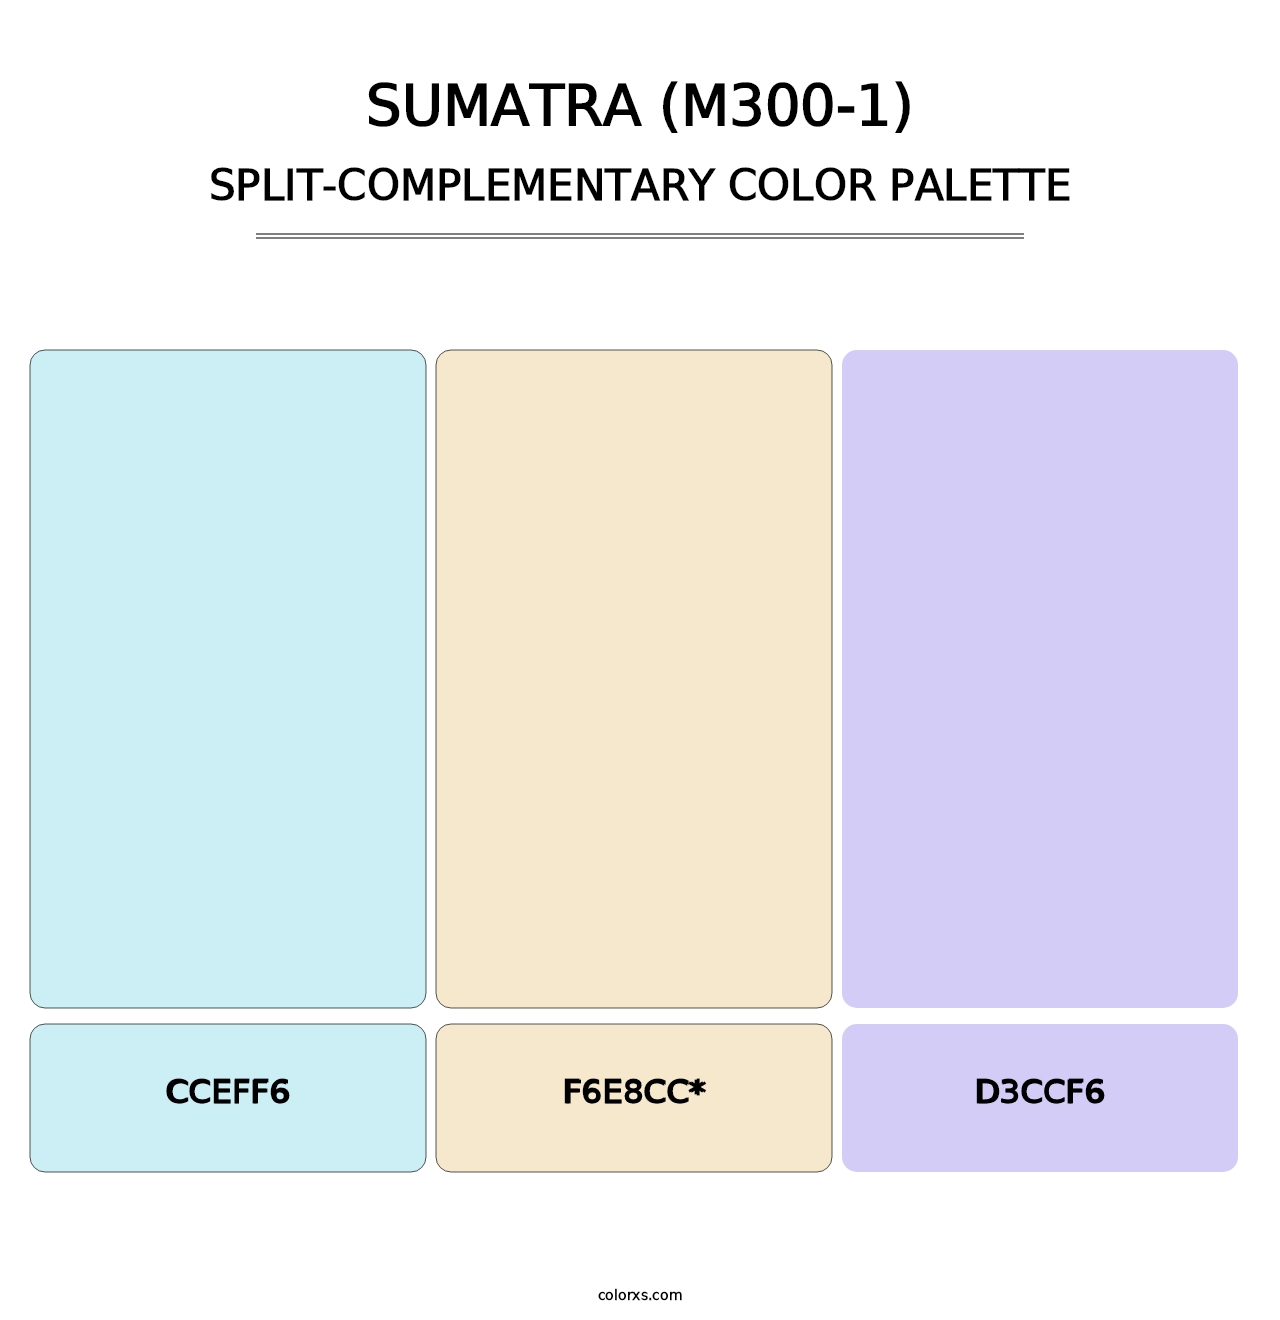 Sumatra (M300-1) - Split-Complementary Color Palette